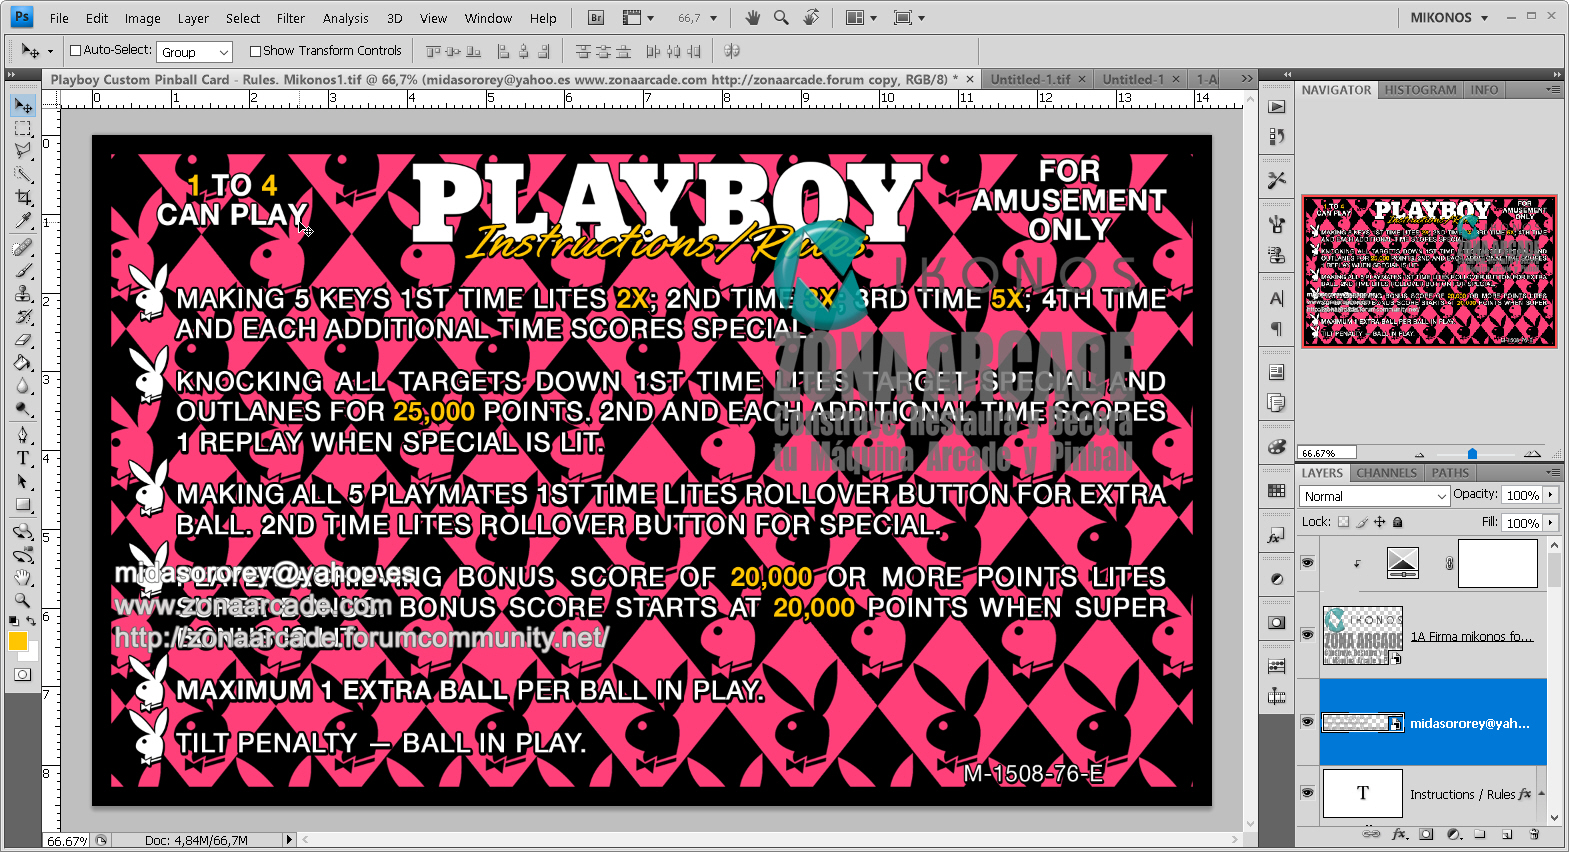 Playboy Custom Pinball Card - Rules. Mikonos1